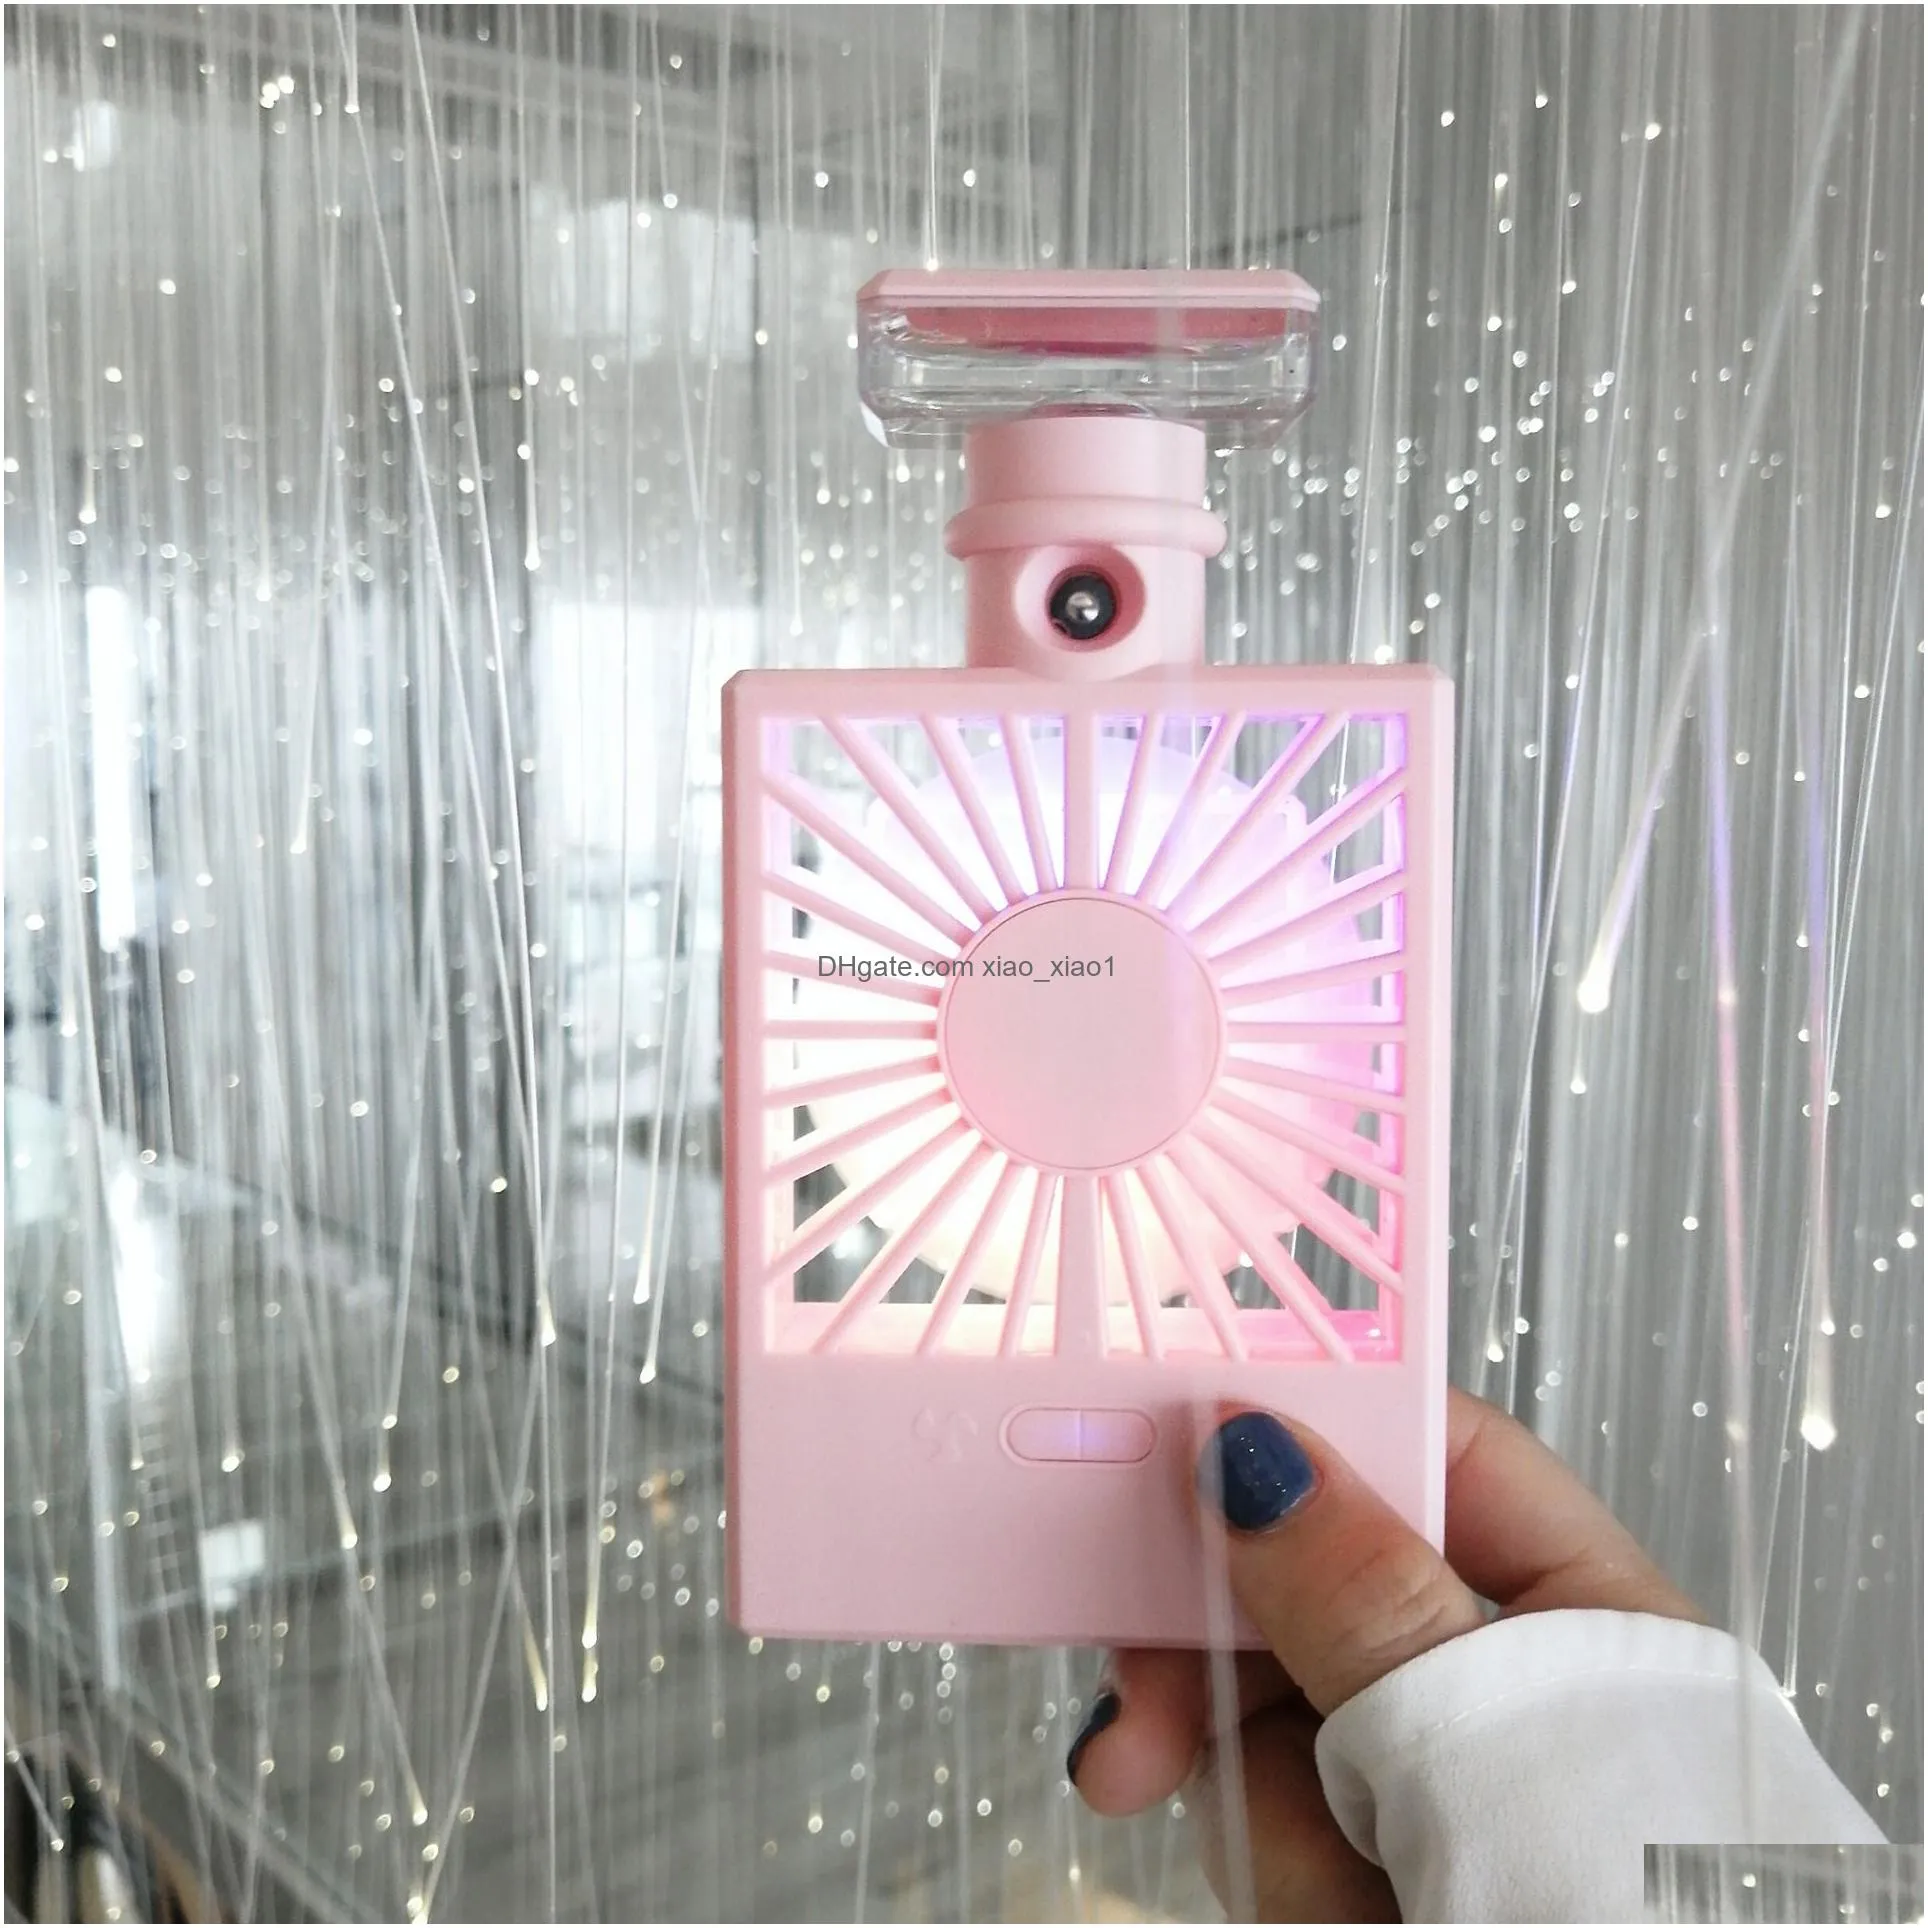 summer high fashion mini fan portable hand mini water spray air conditioner cool air cooler usb charging perfume shaped ship